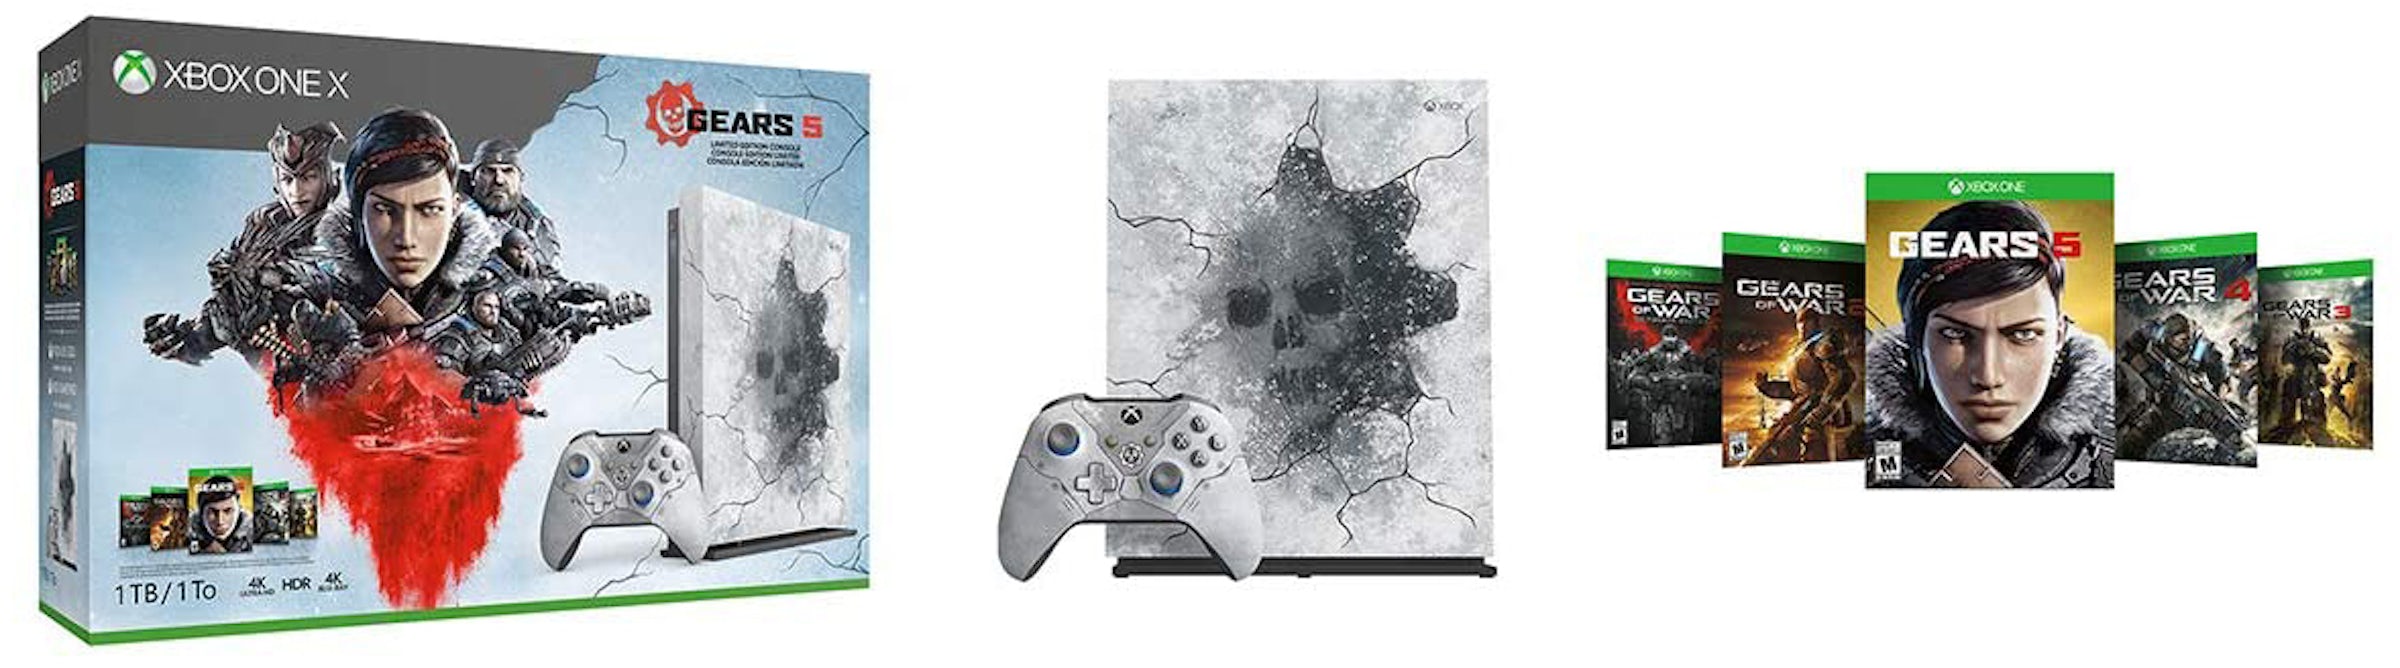 Gears 5 - Xbox One 